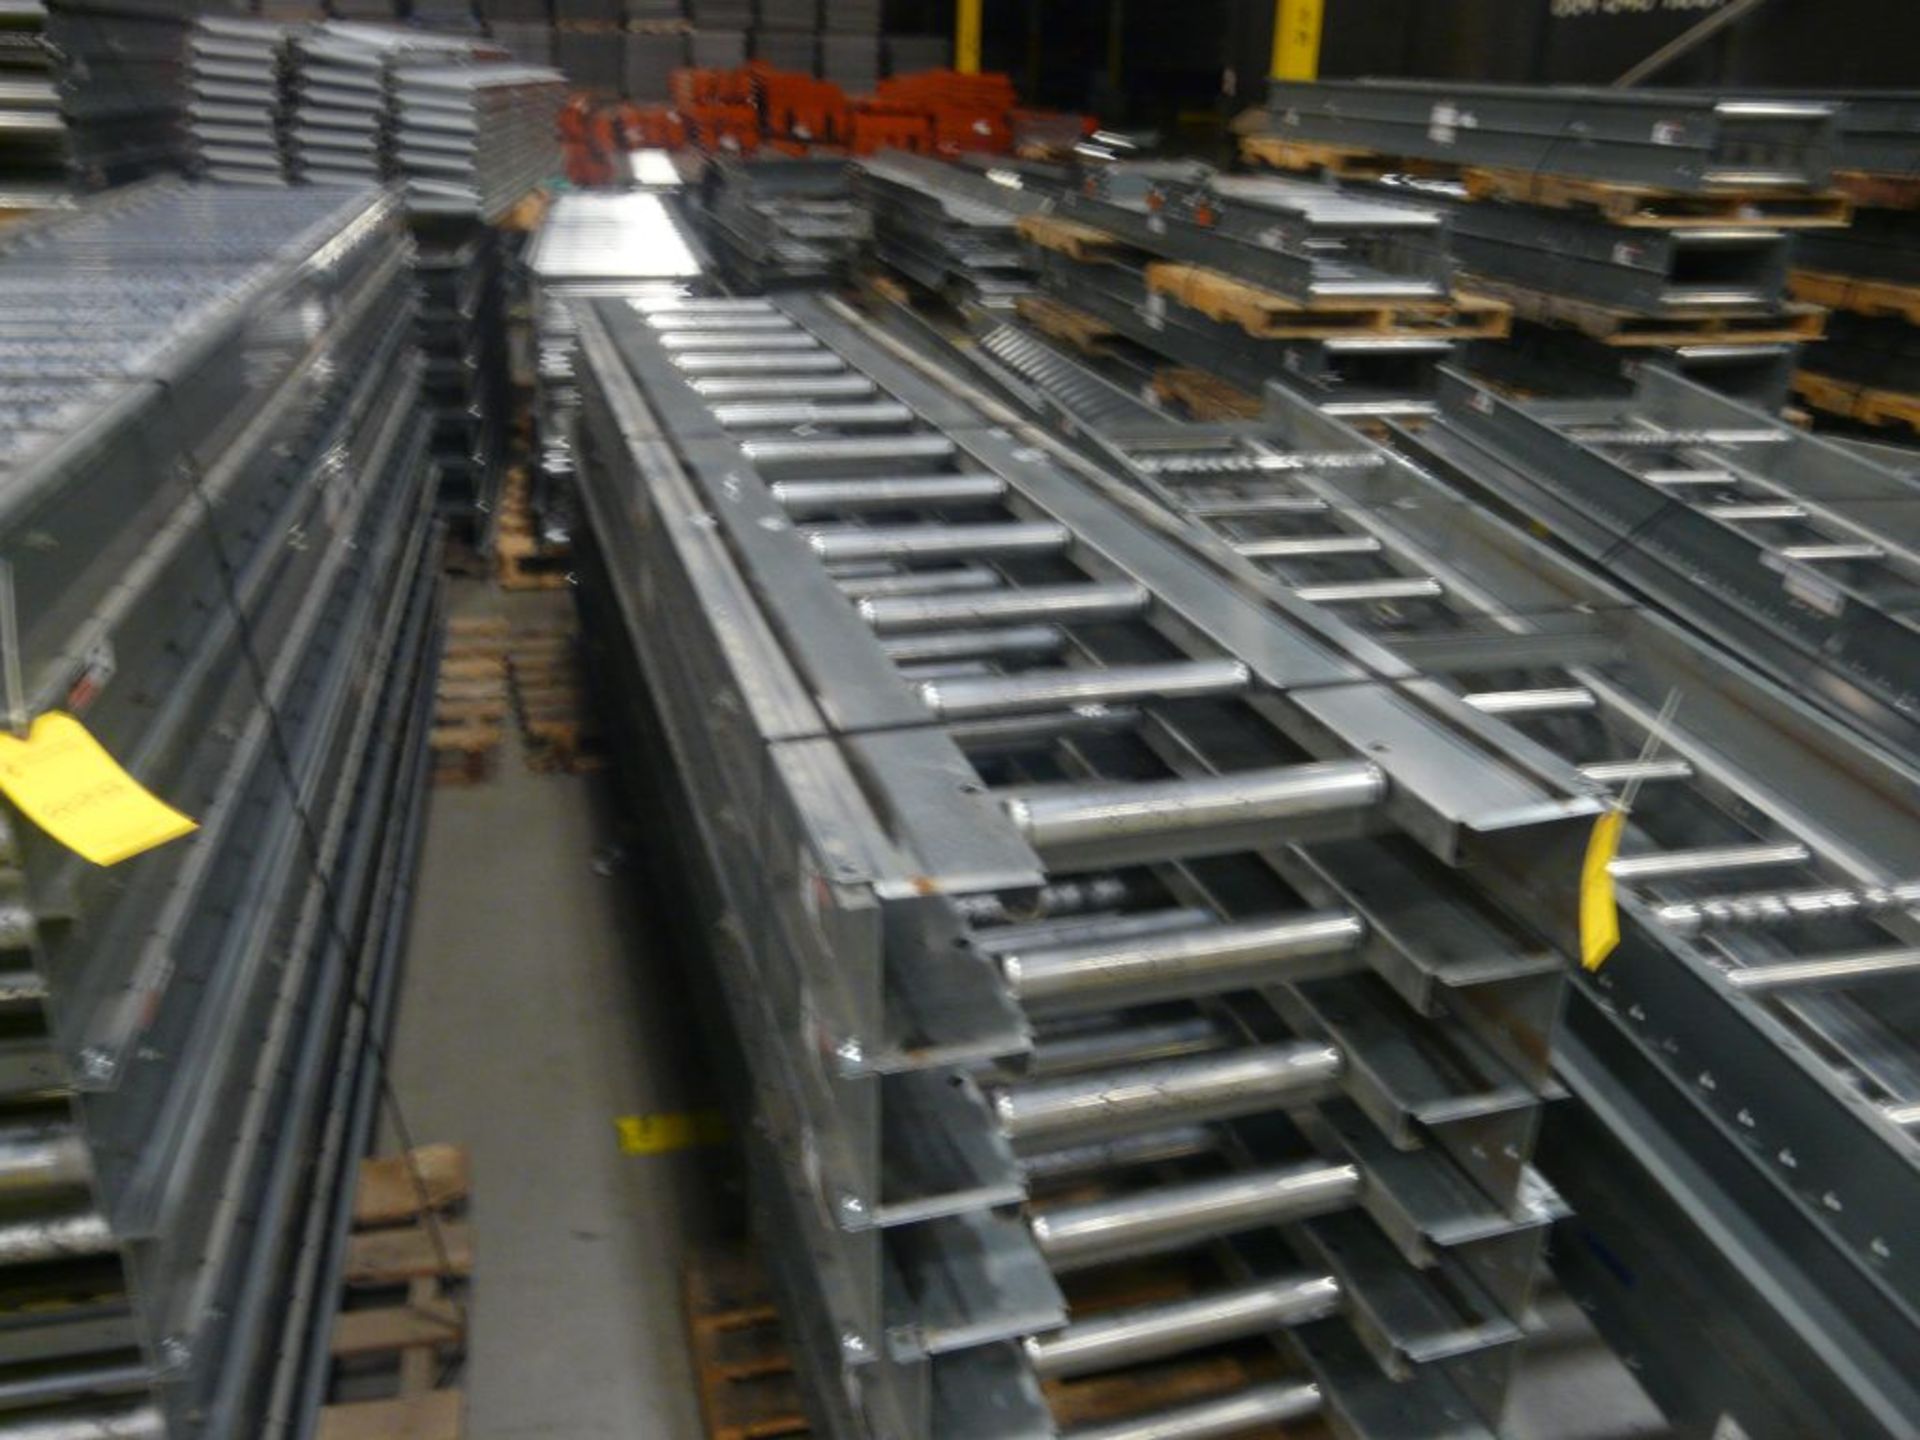 Lot of (3) 200 Belt Intermediate Conveyors - 12'L x 28"W; Tag: 223709 - $30 Lot Loading Fee - Image 3 of 4